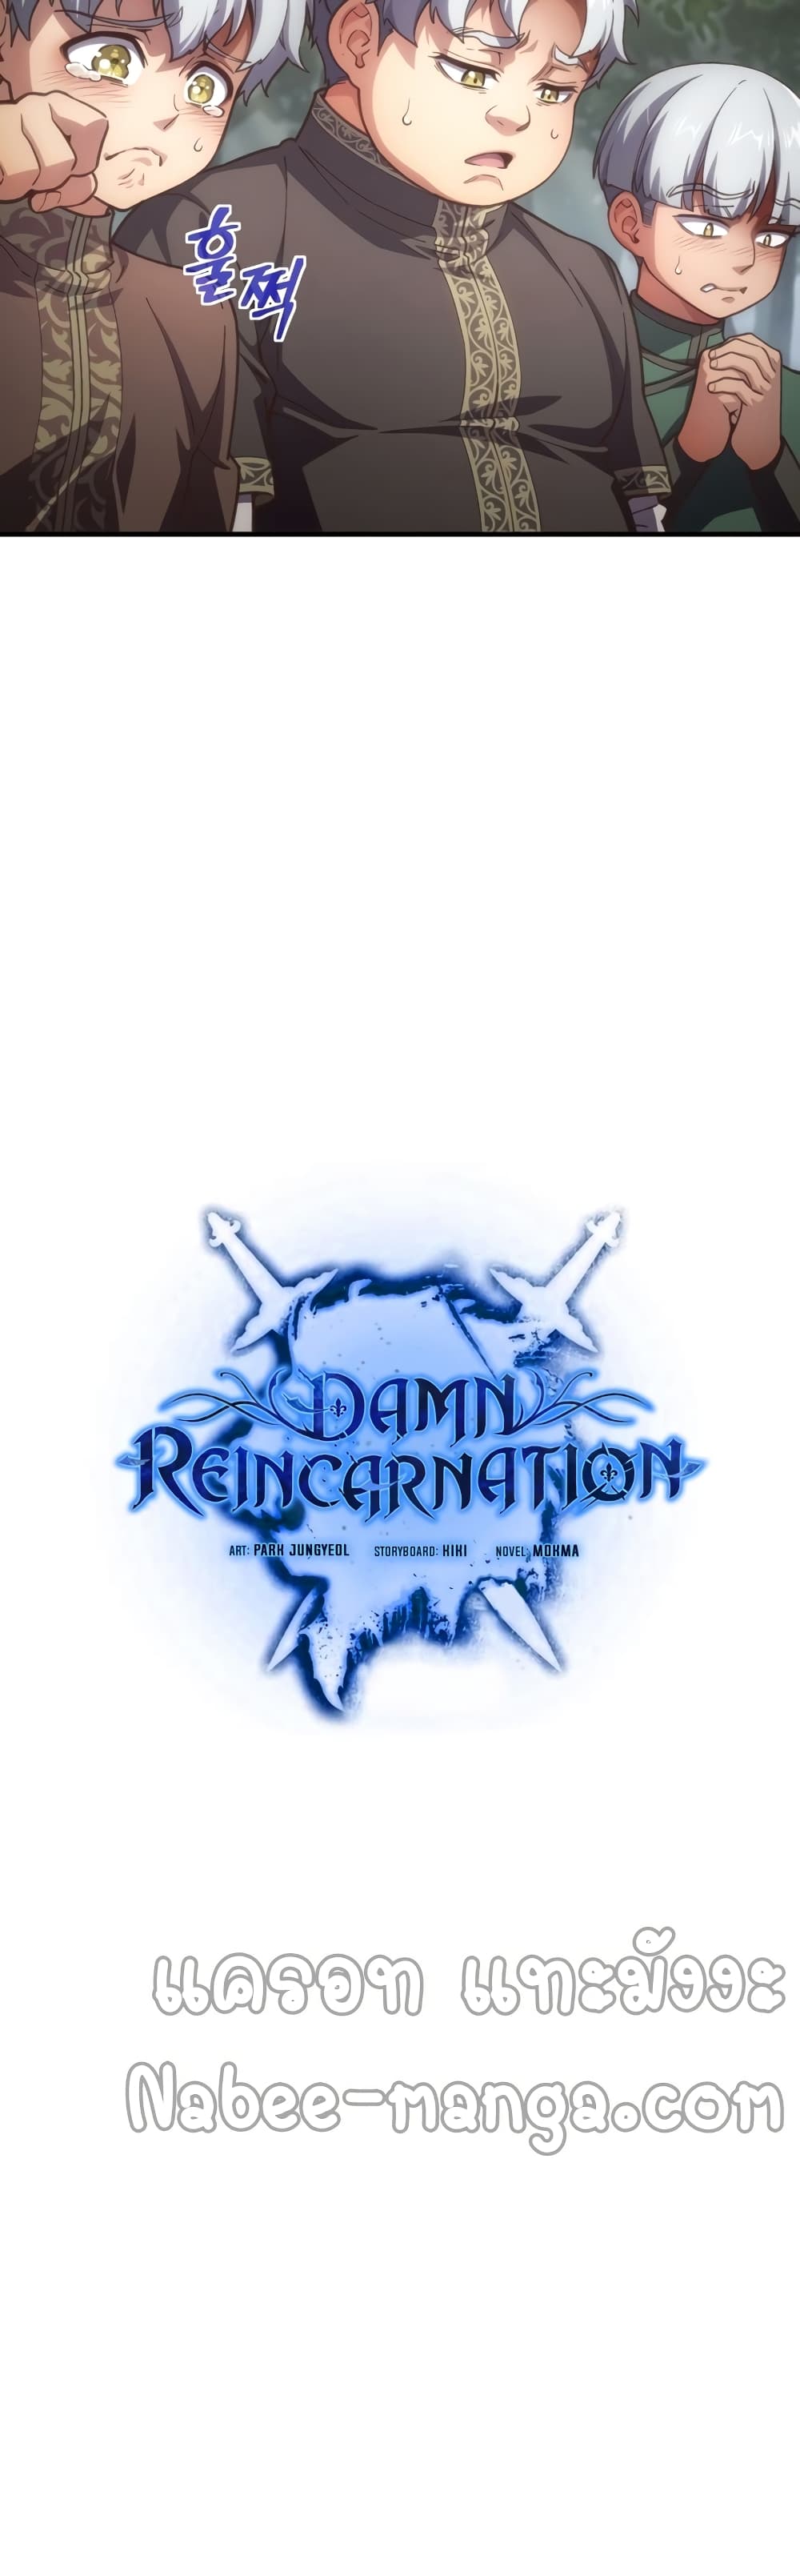 Damn Reincarnation 9-9